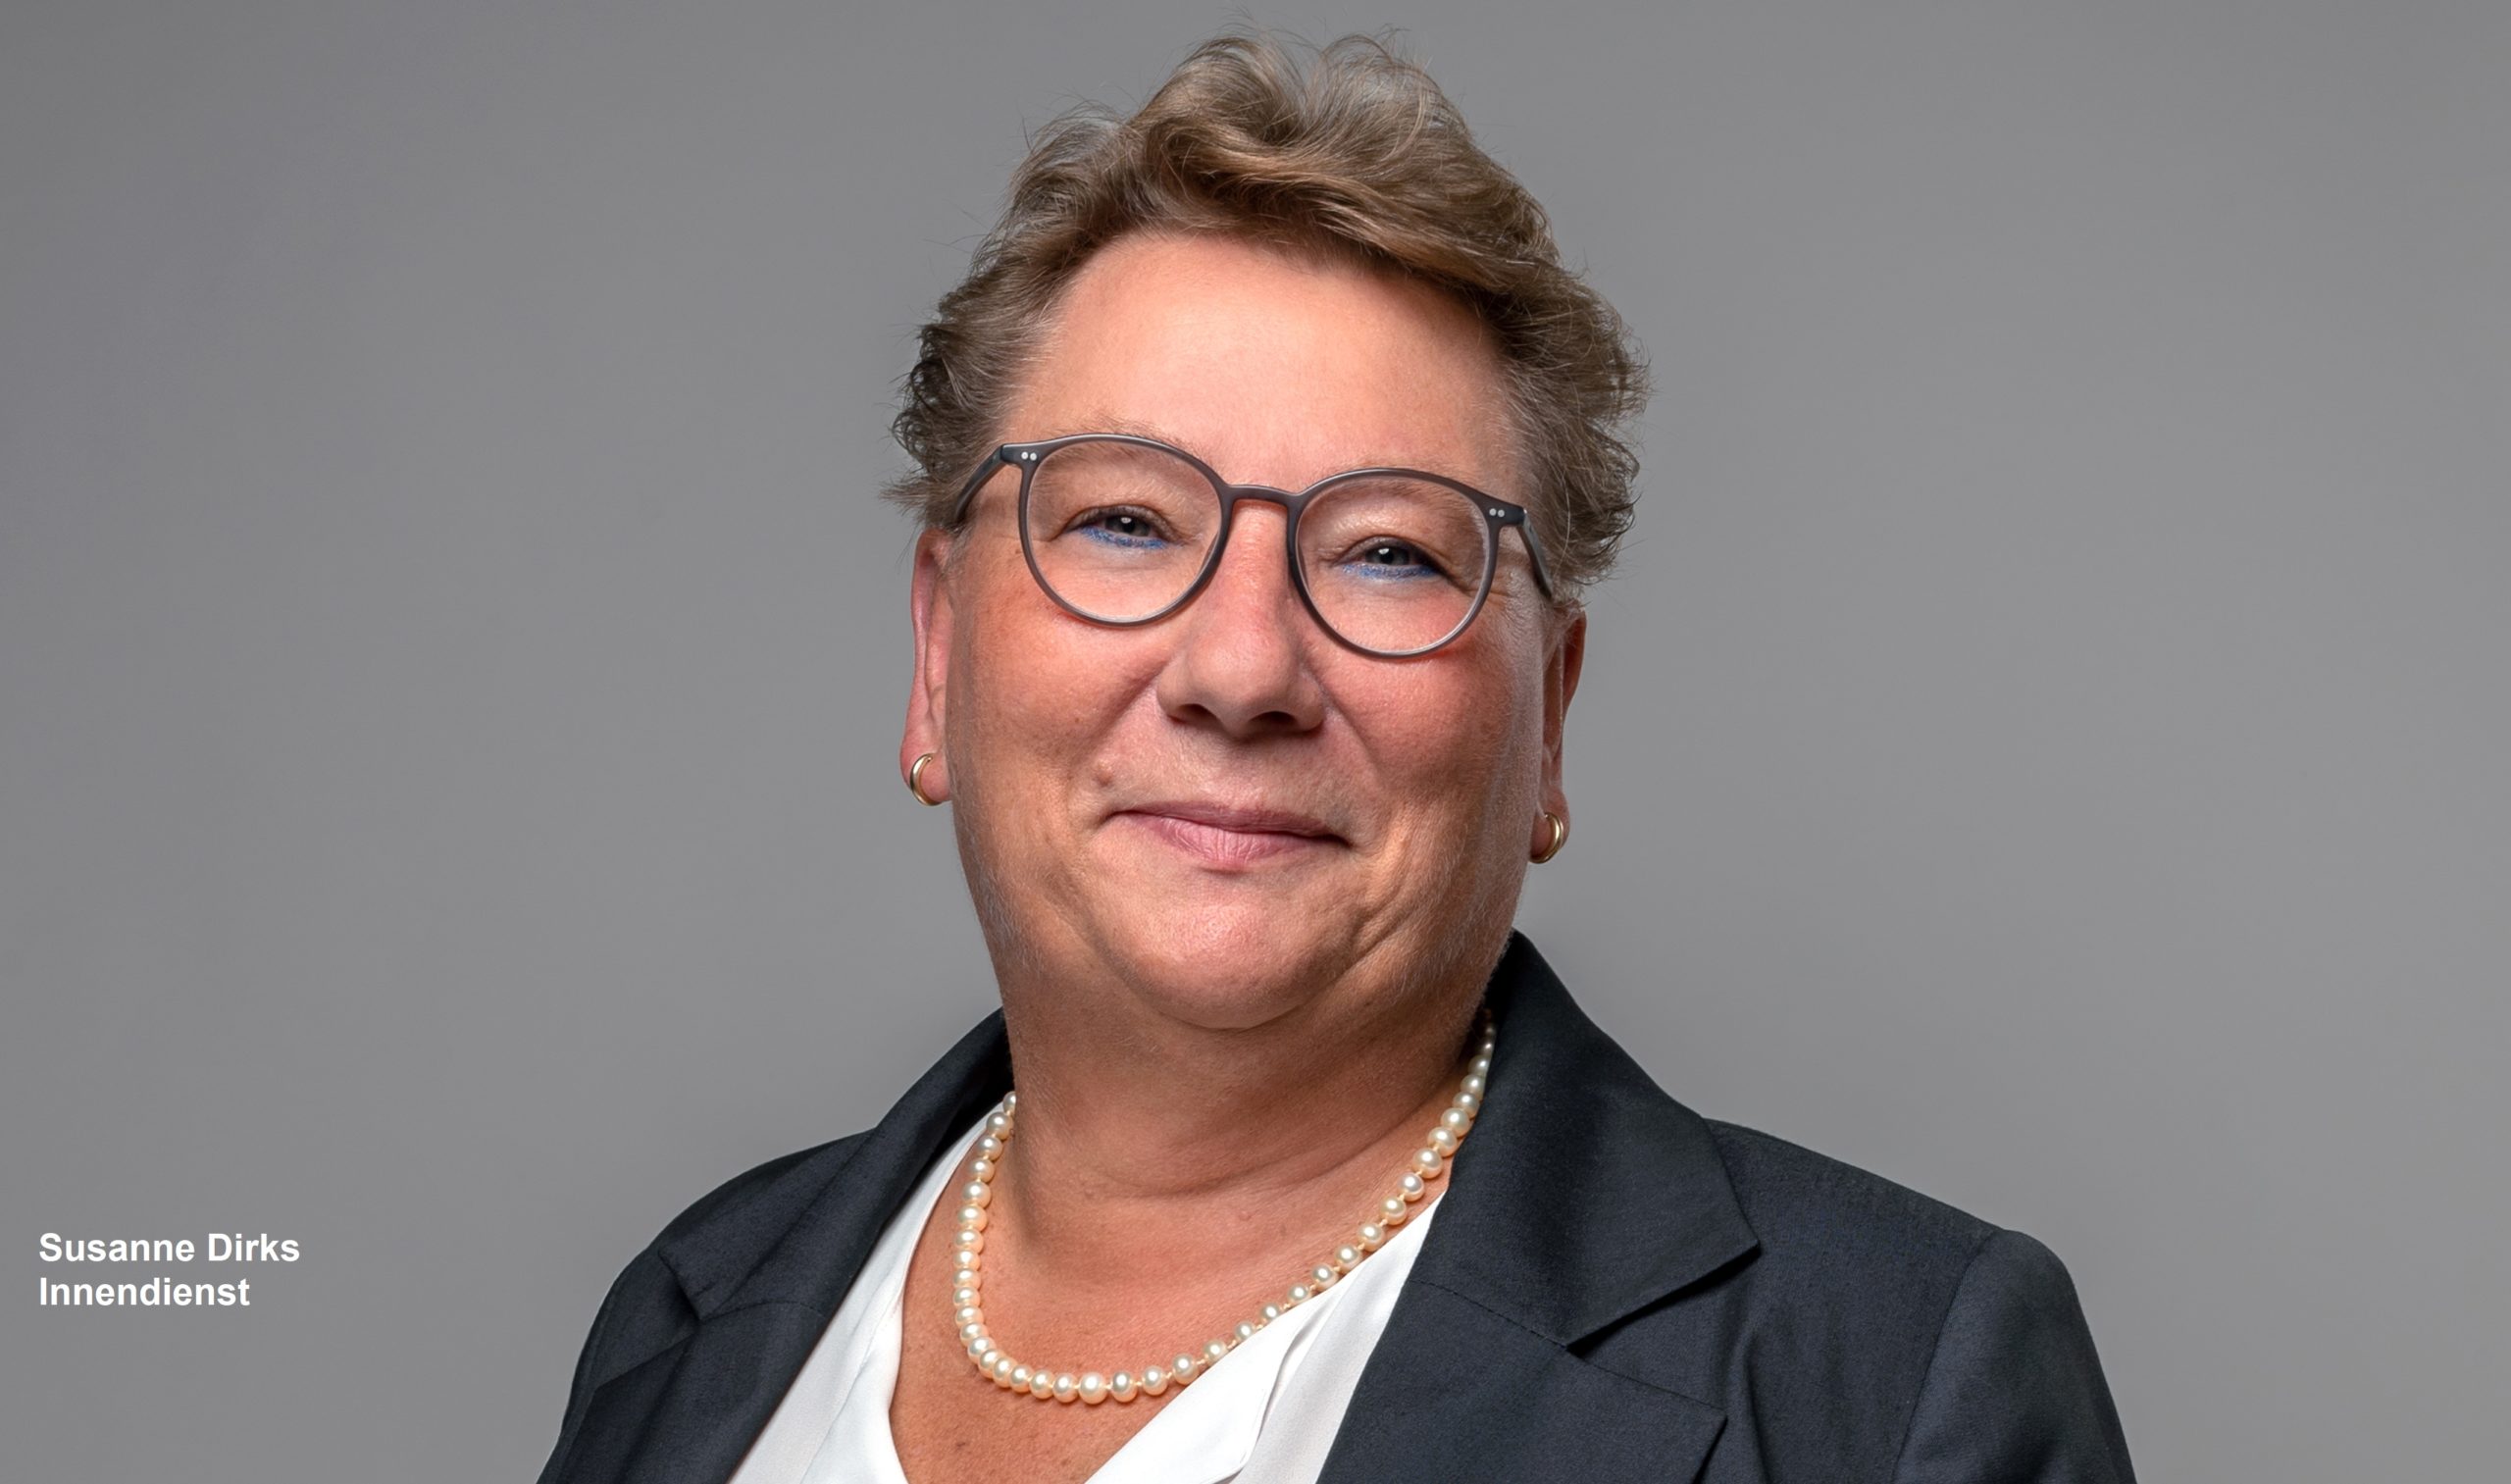 Susanne Dirks